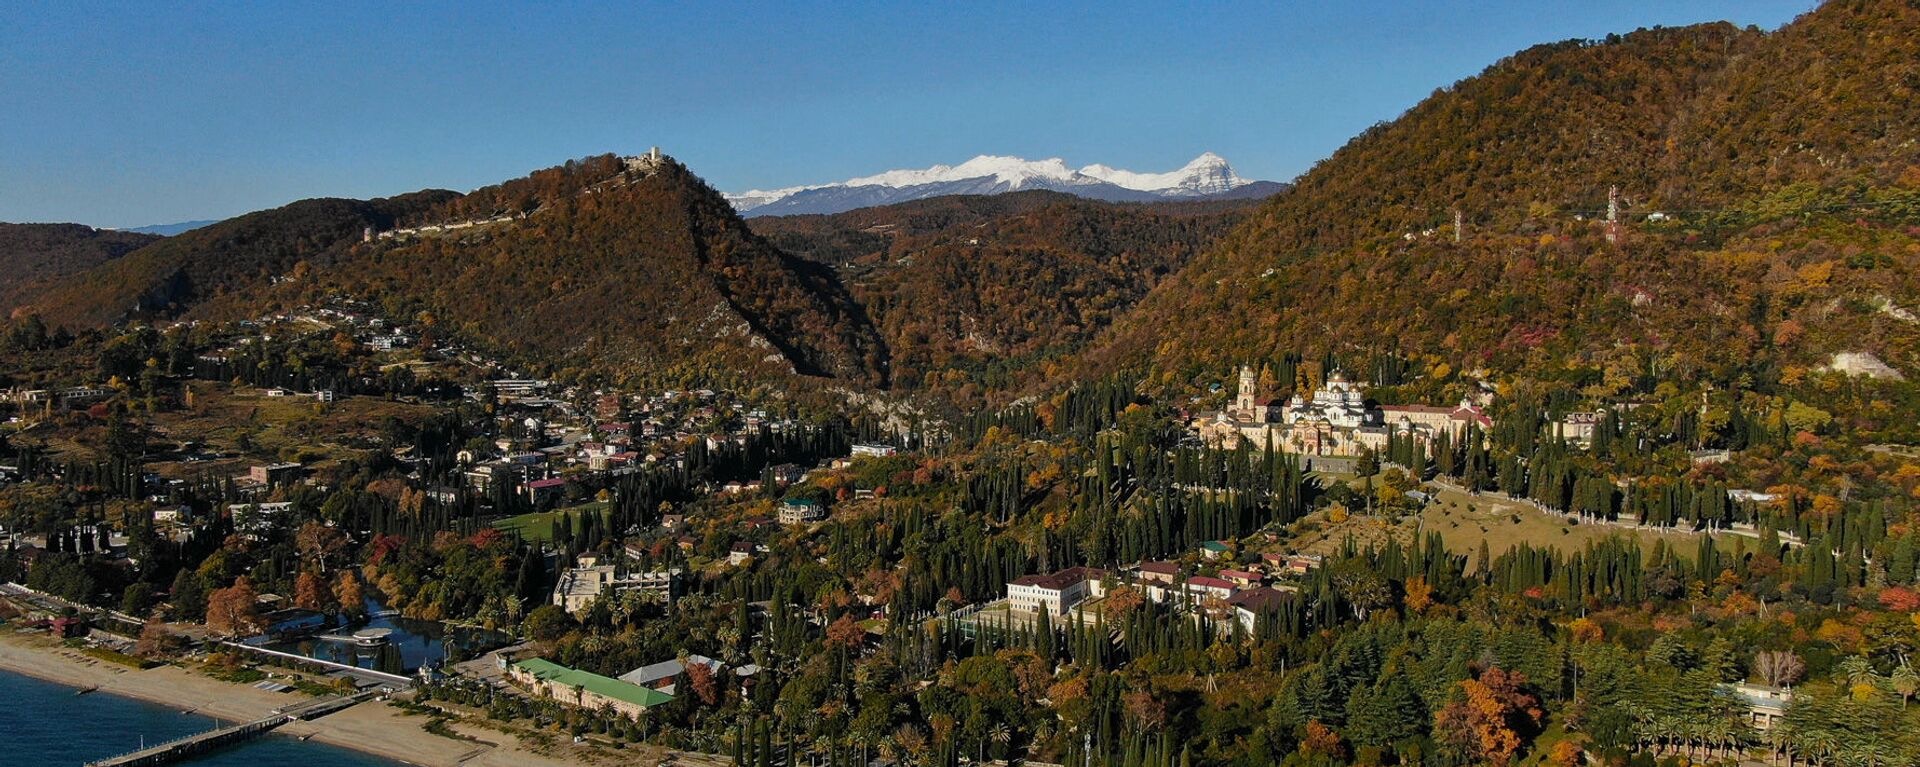 Осень в Абхазии  - Sputnik Абхазия, 1920, 17.11.2021